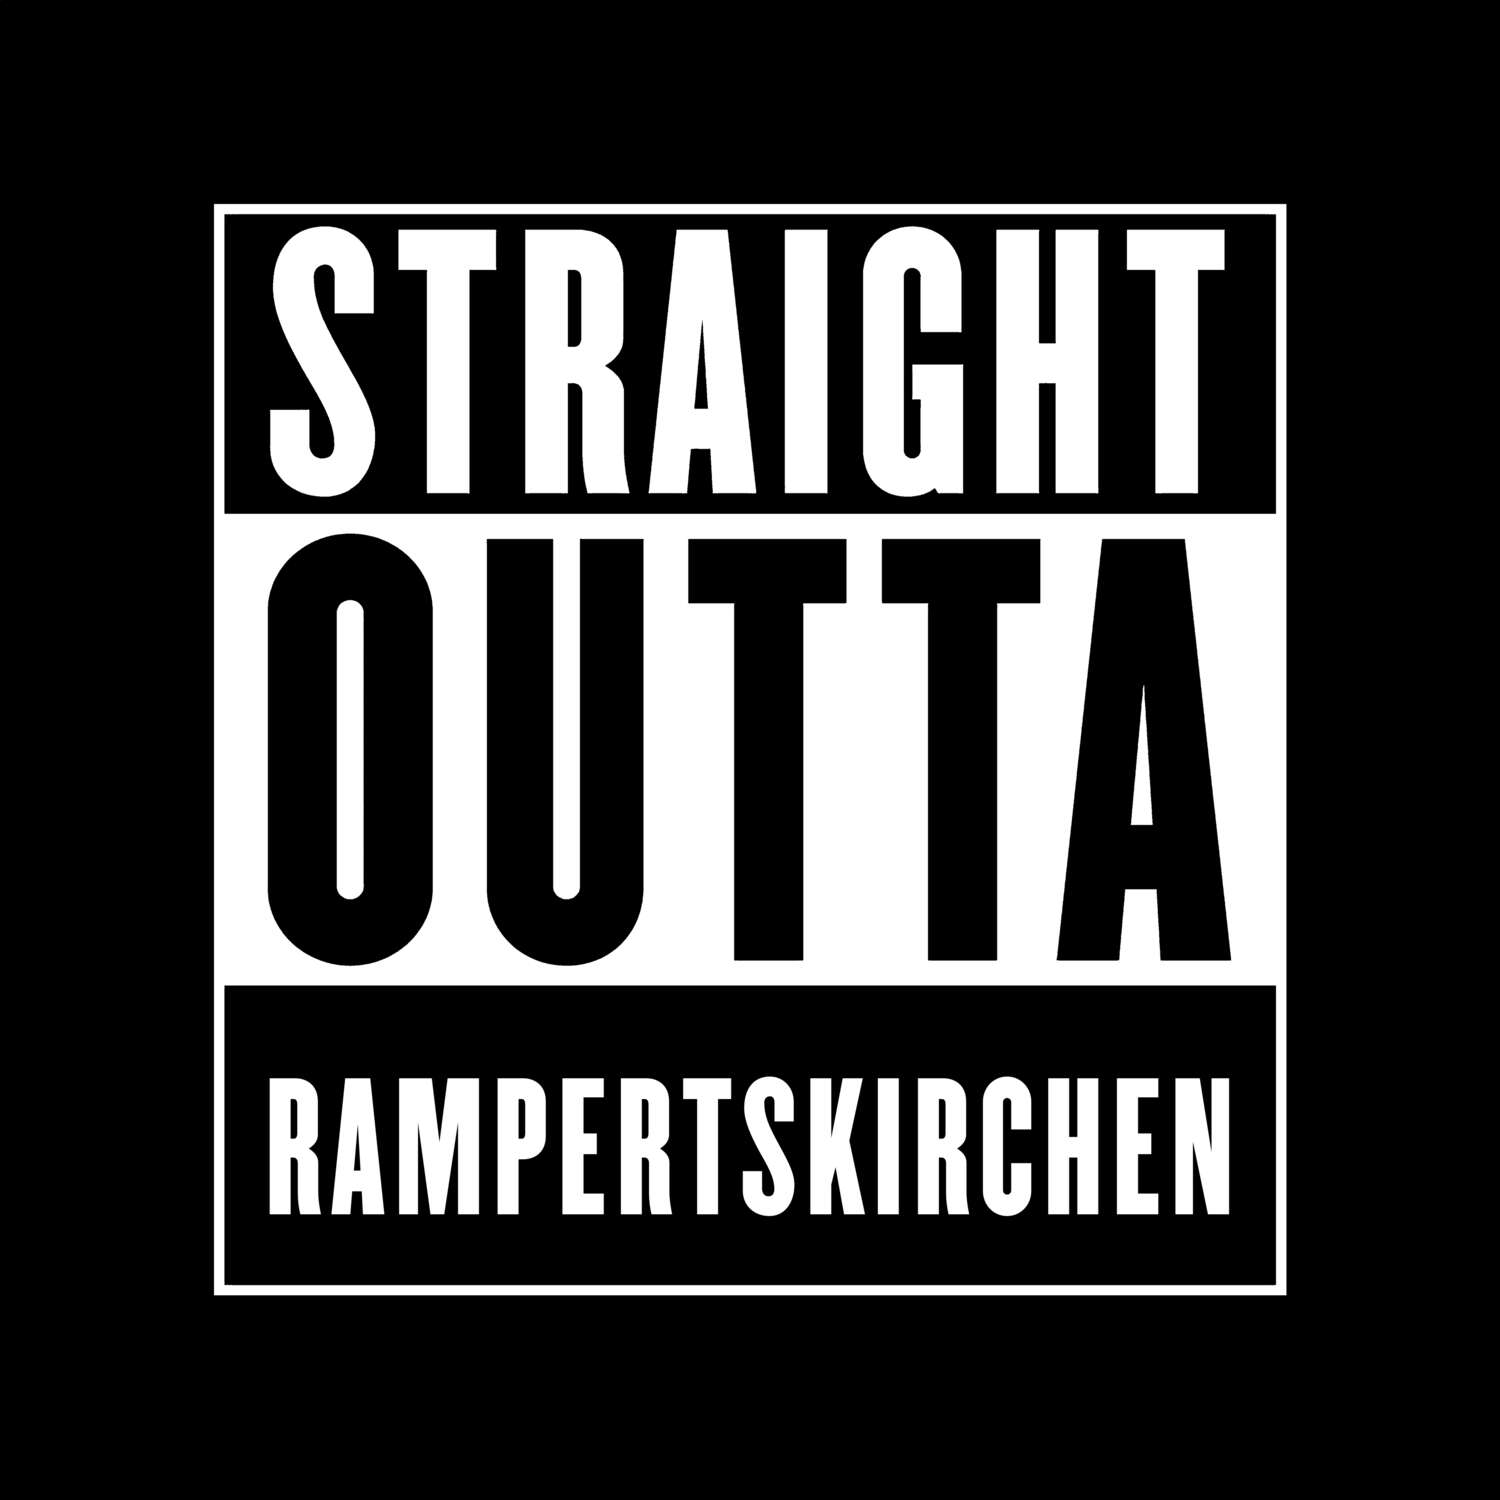 Rampertskirchen T-Shirt »Straight Outta«